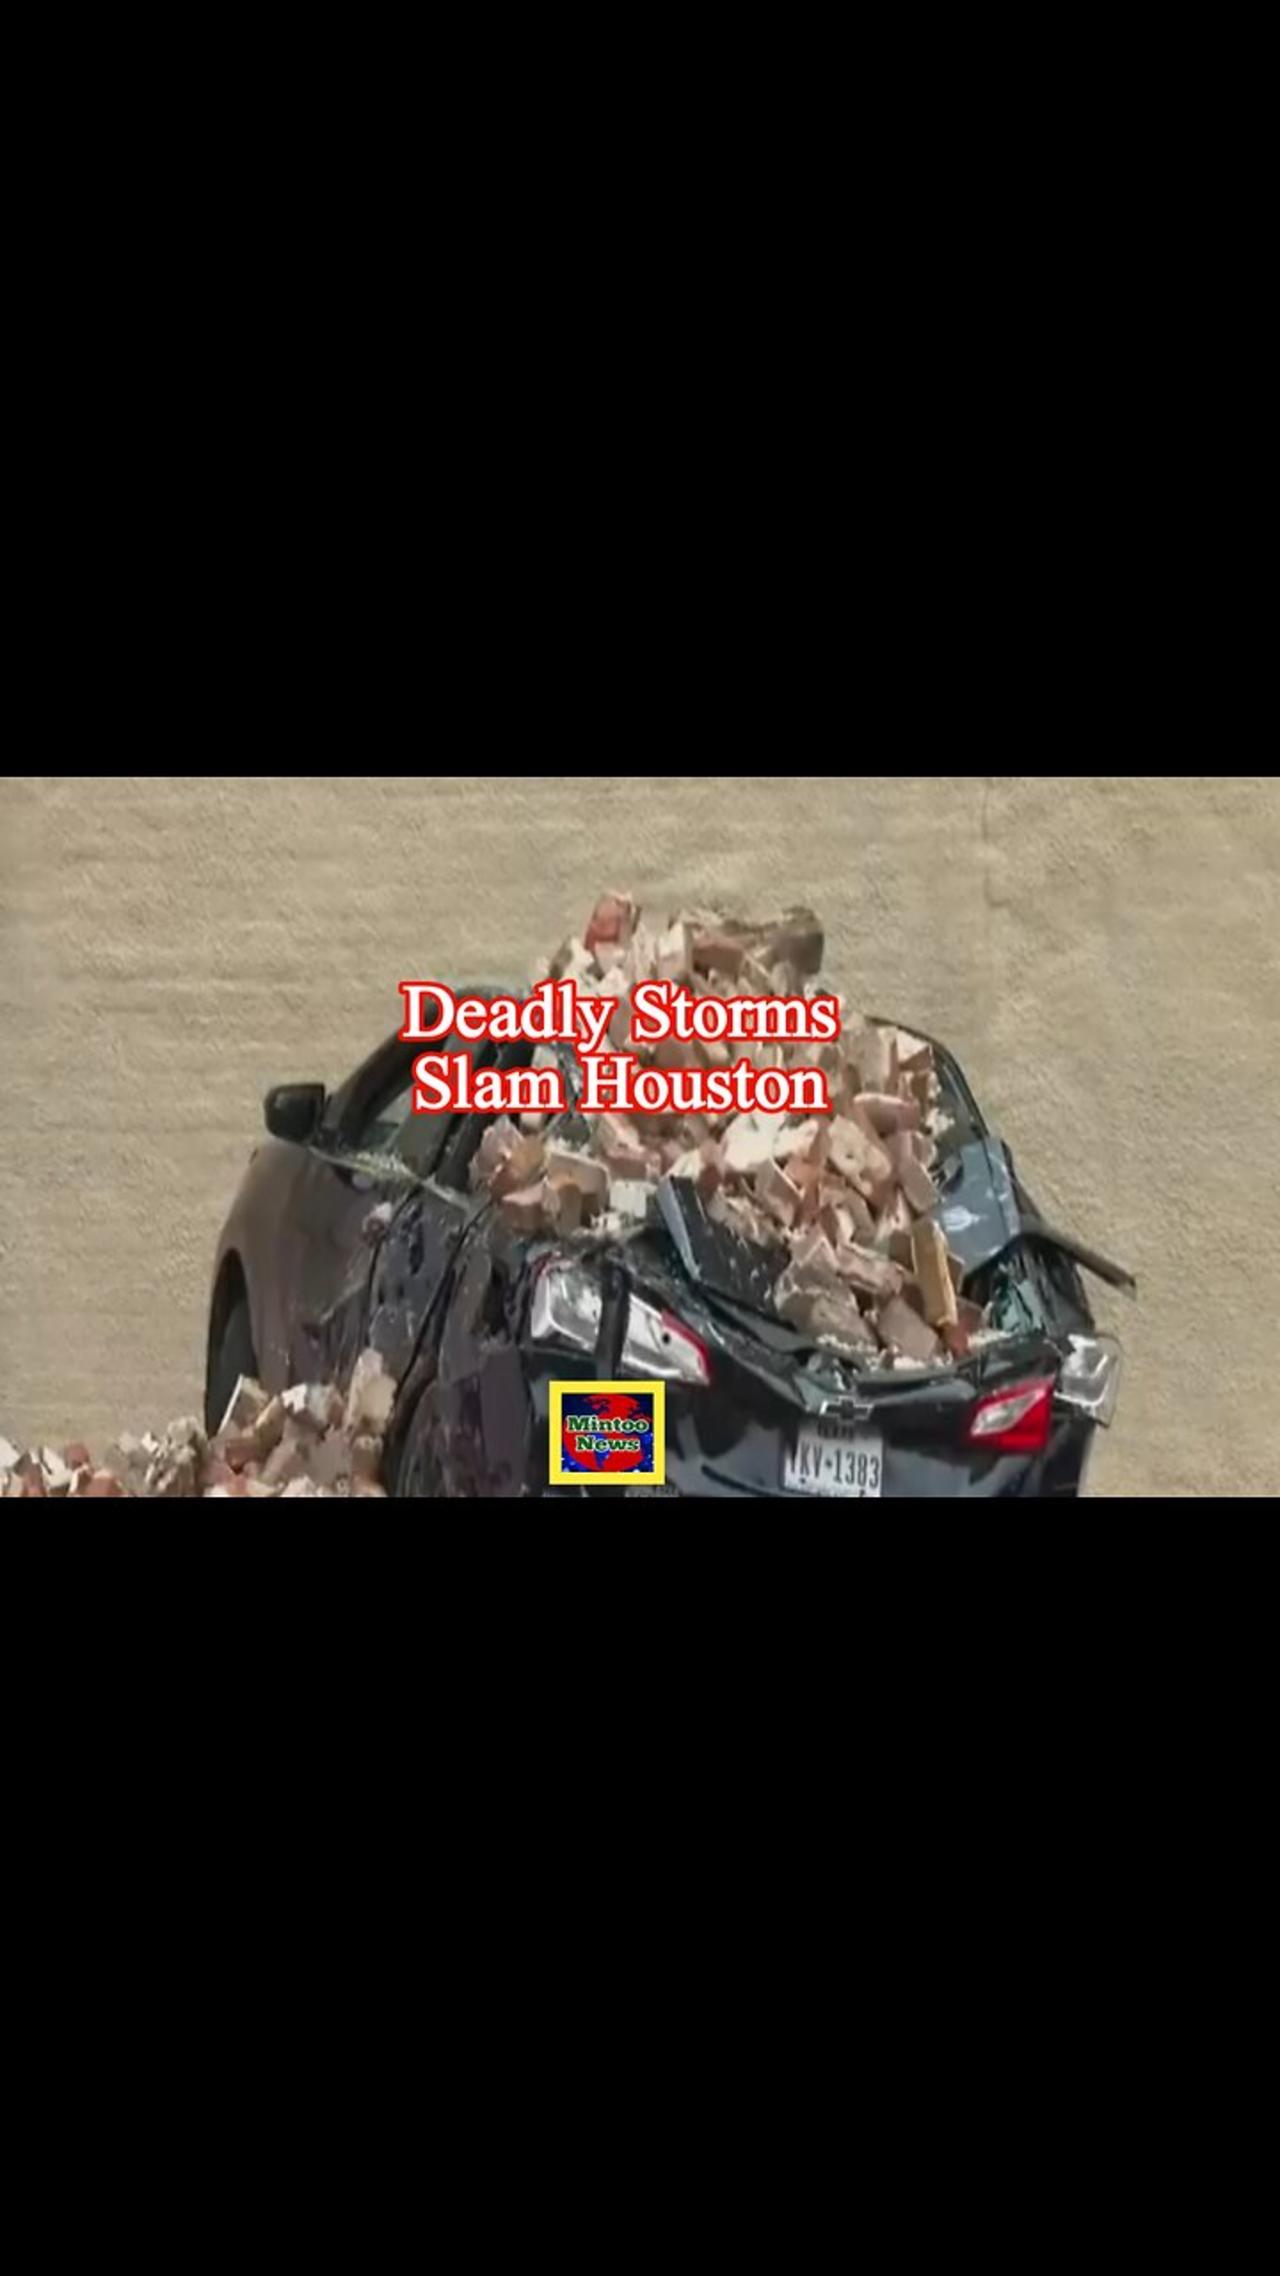 5 dead as deadly storms slam Houston